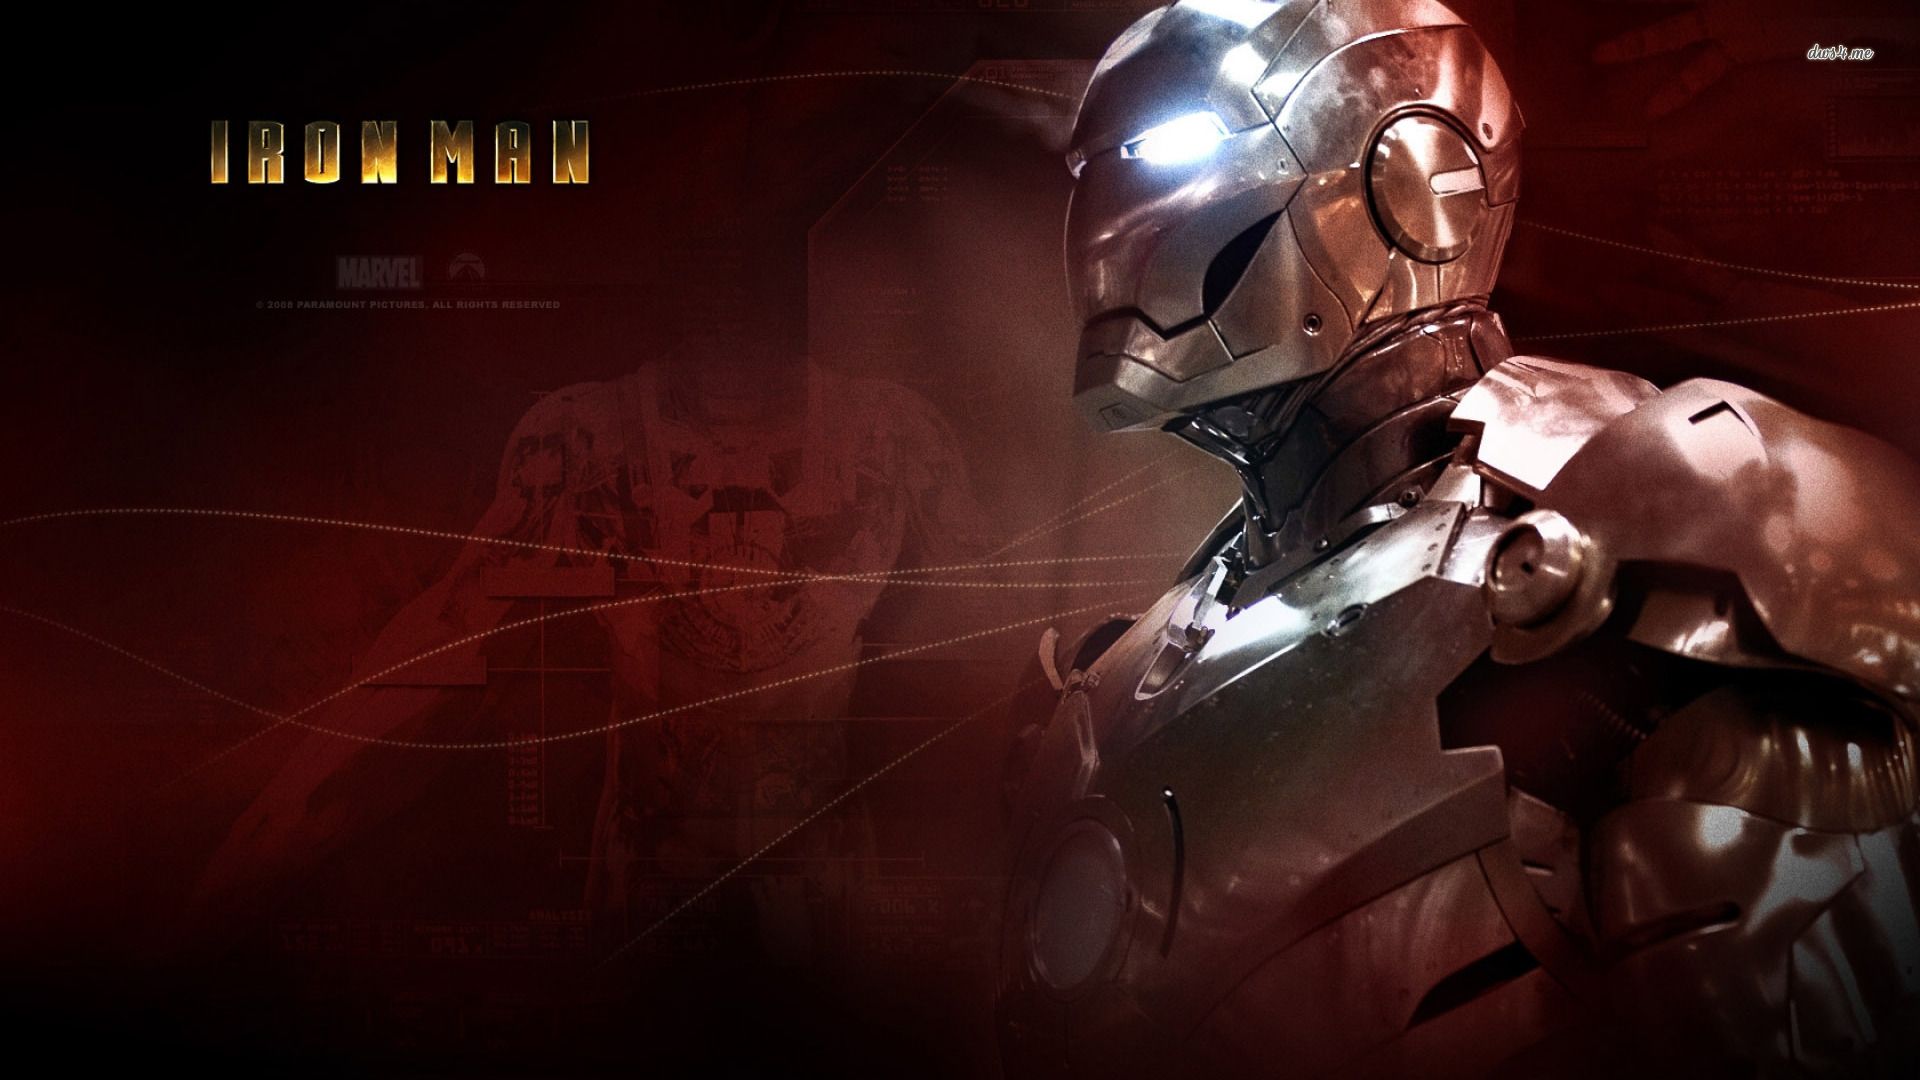 Iron Man wallpaper - Movie wallpapers - #20928